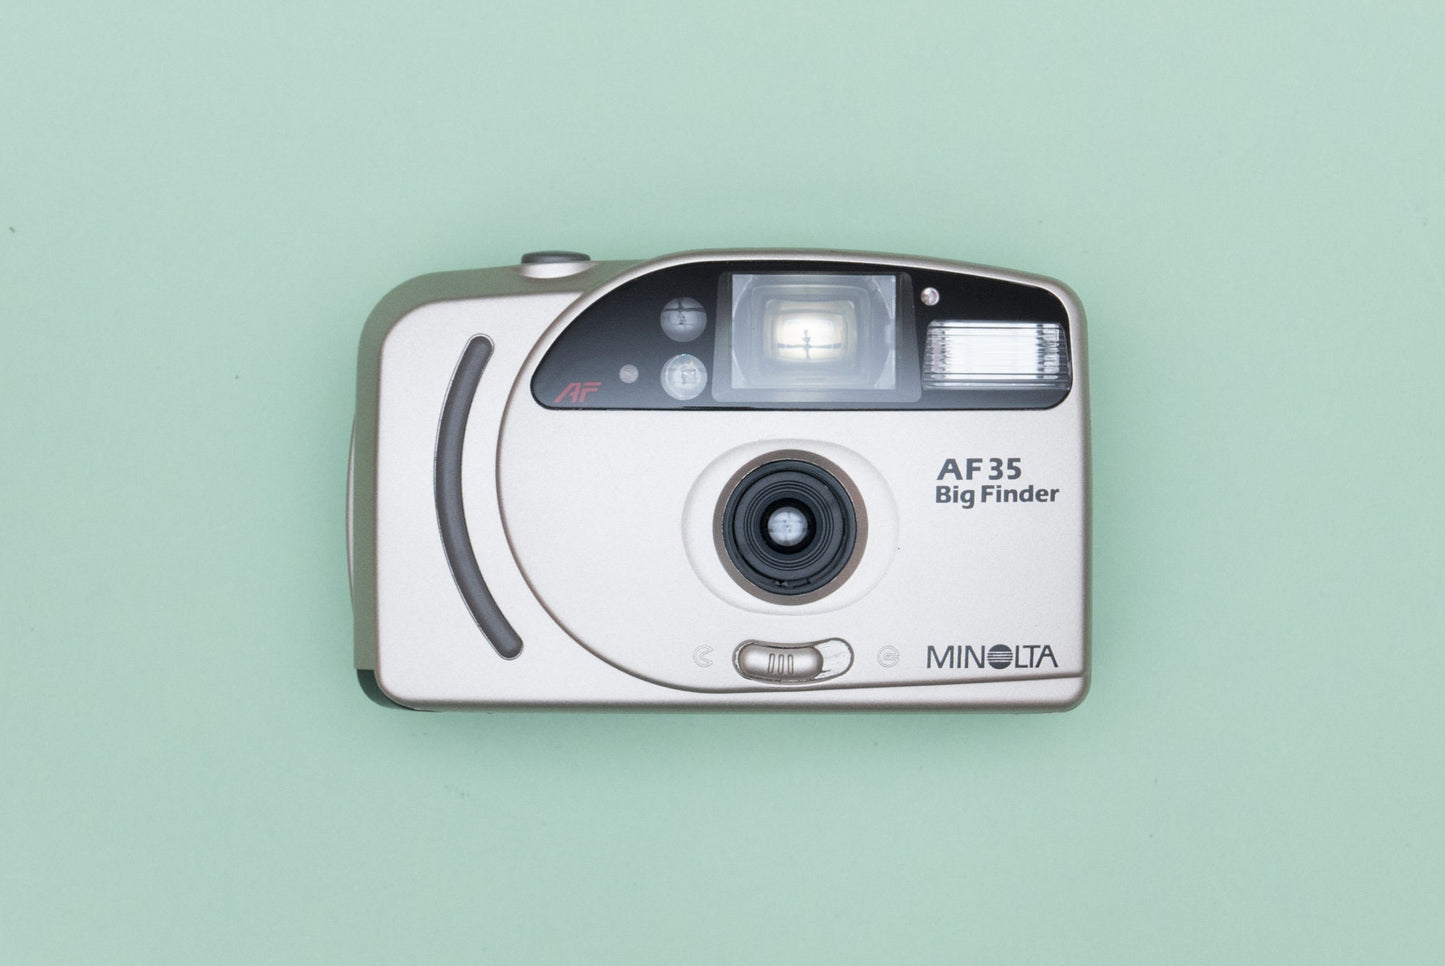 Minolta AF35 Big Finder Compact 35mm Point and Shoot Film Camera